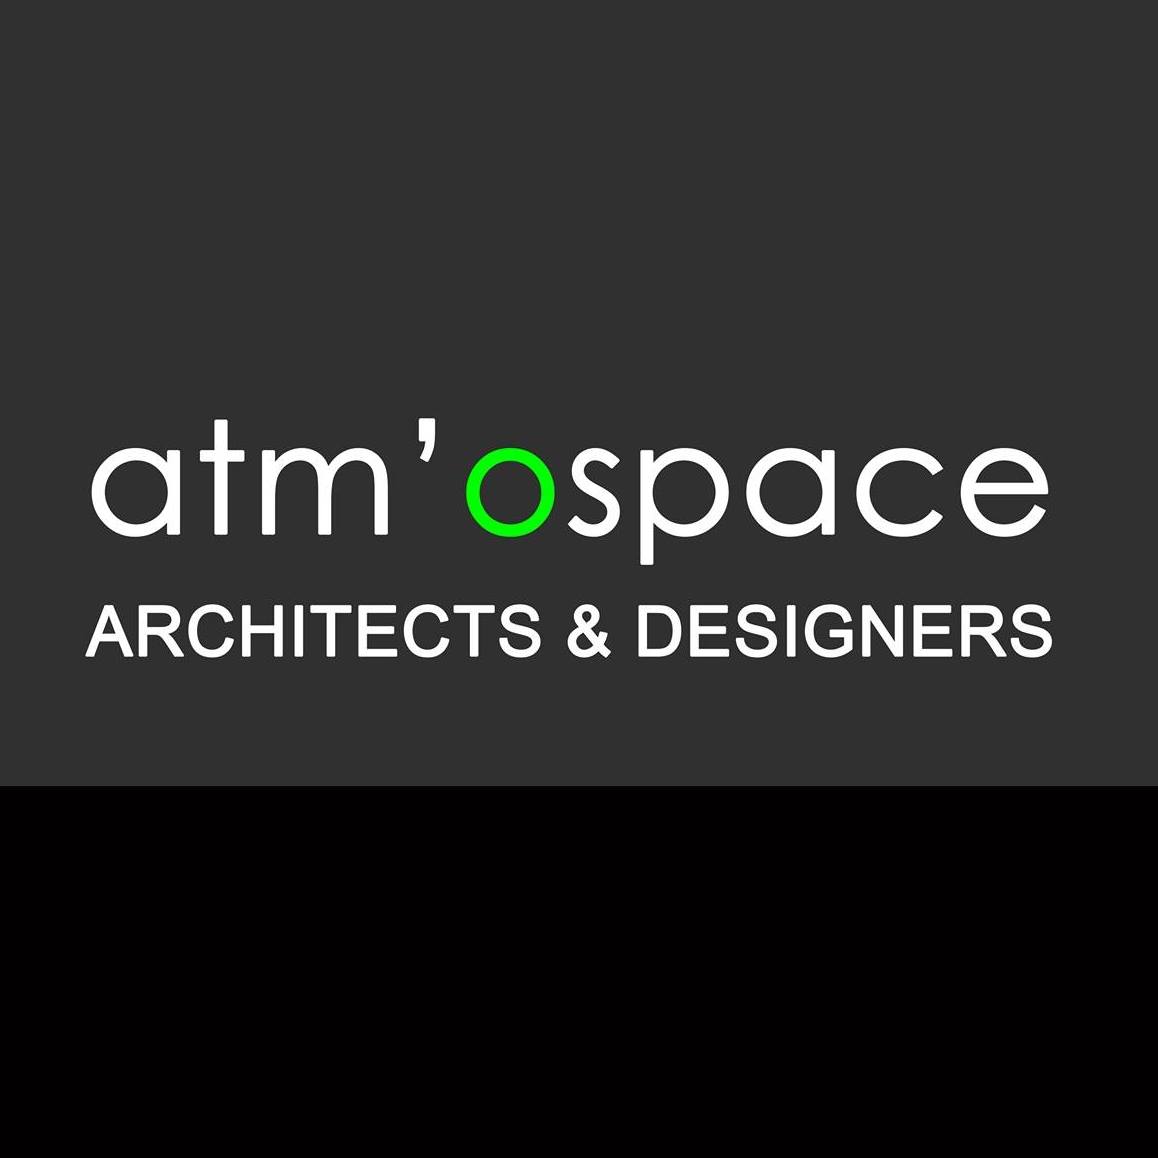 apm'ospace|Architect|Professional Services